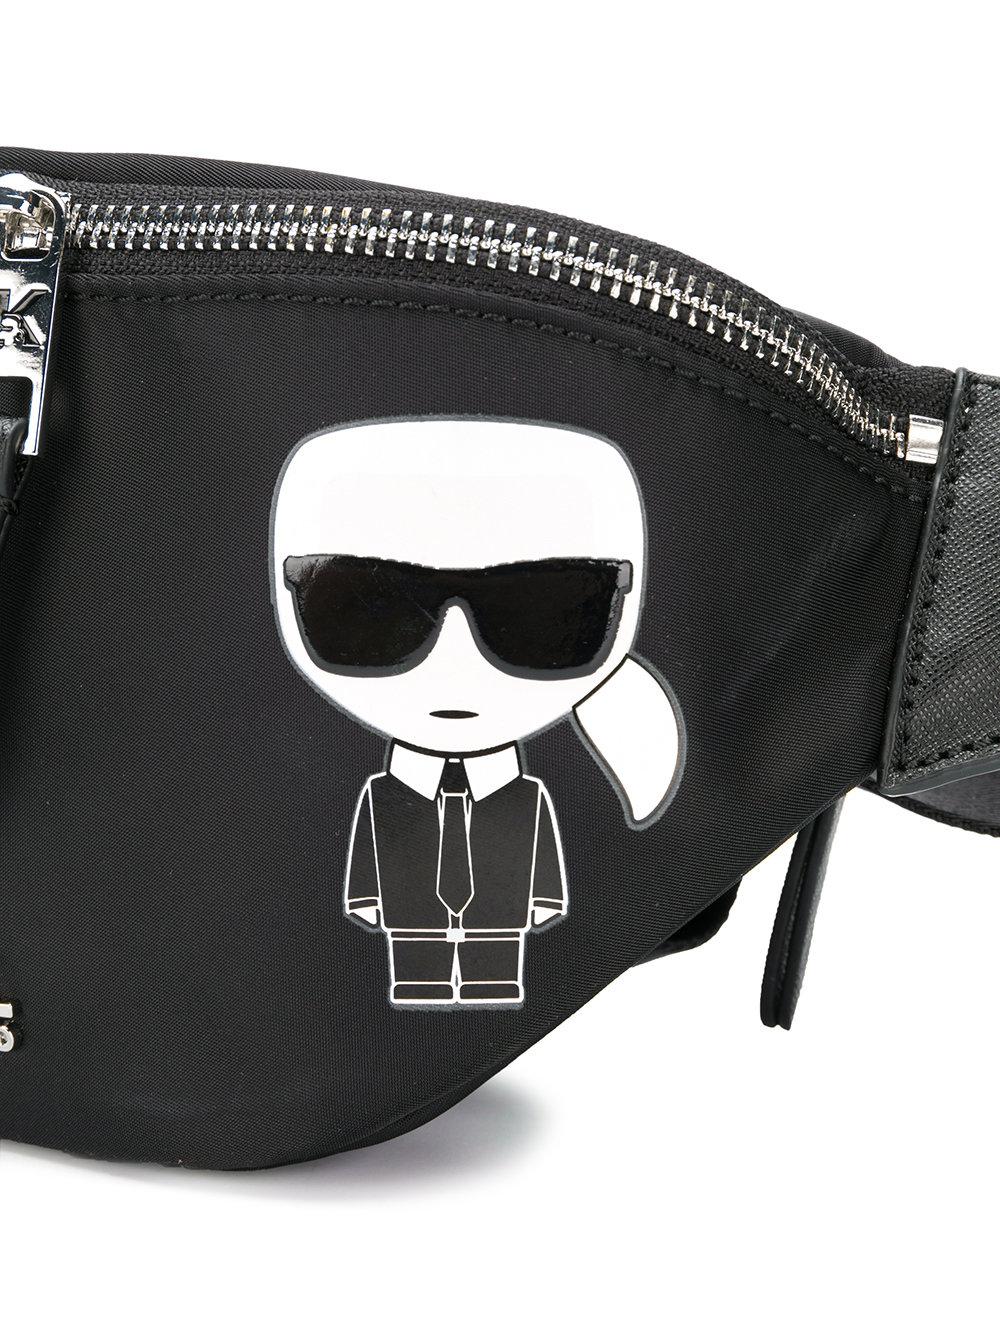 Karl Lagerfeld Leather K/ikonik Belt Bag in Black - Lyst